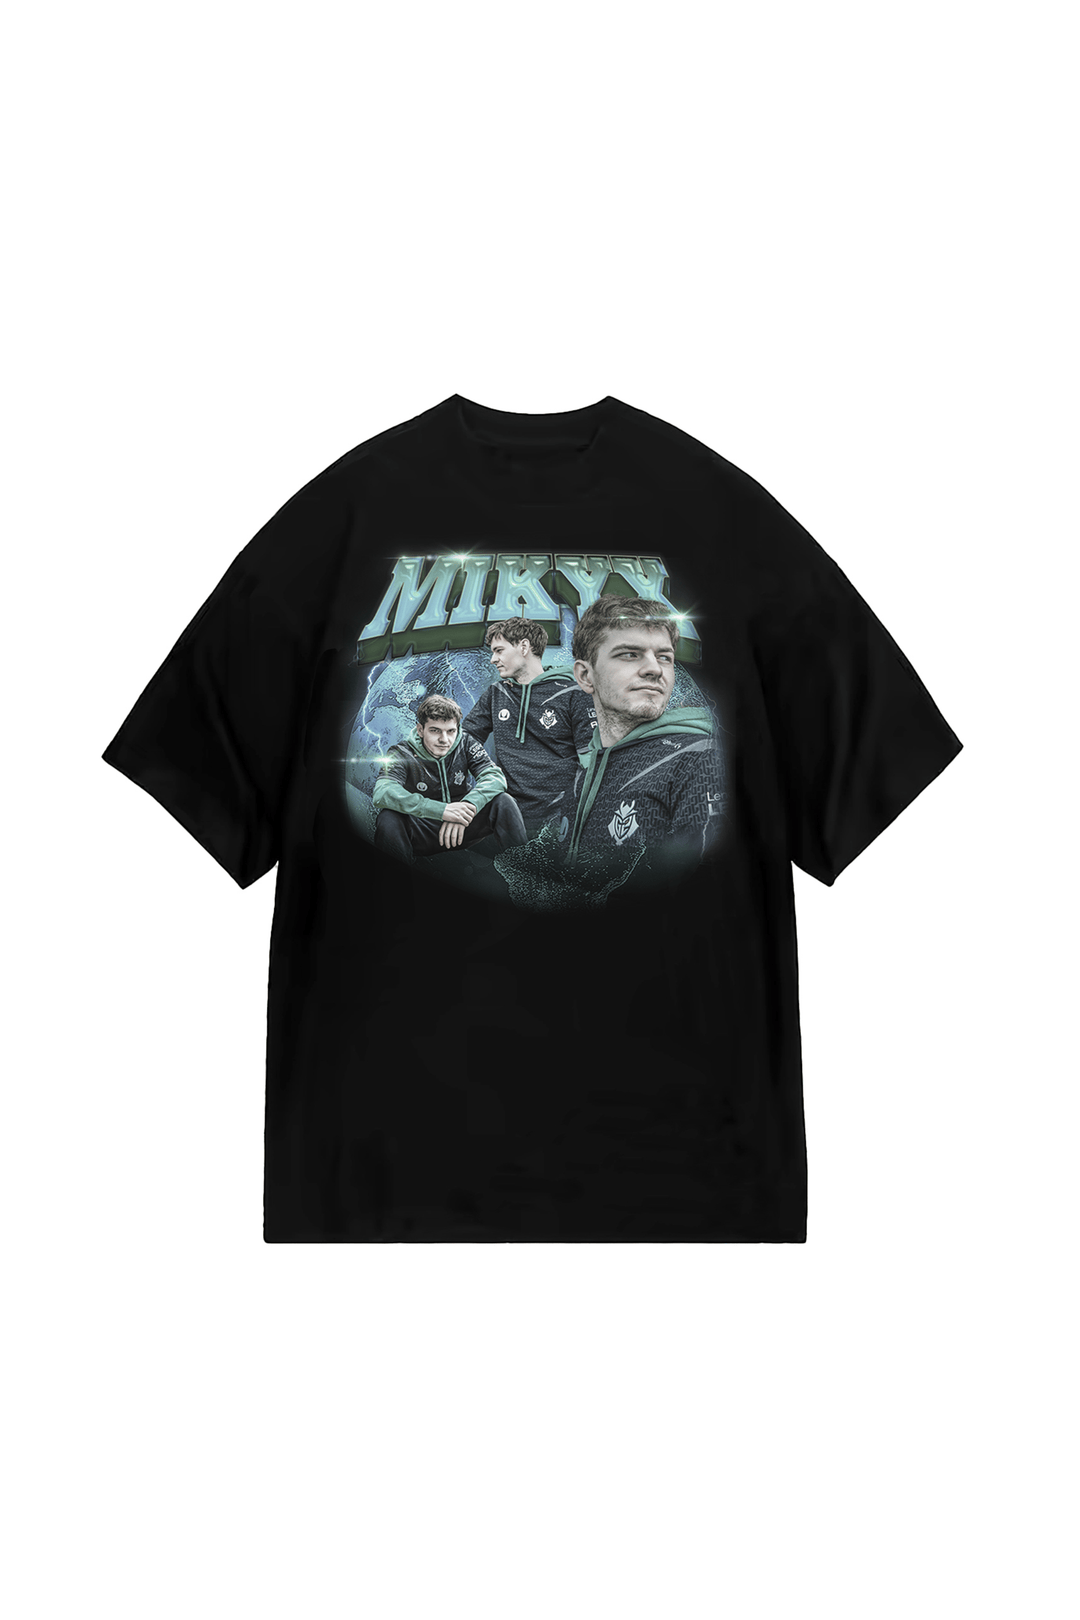 G2 Esports - Mikyx - Bootleg T-Shirt